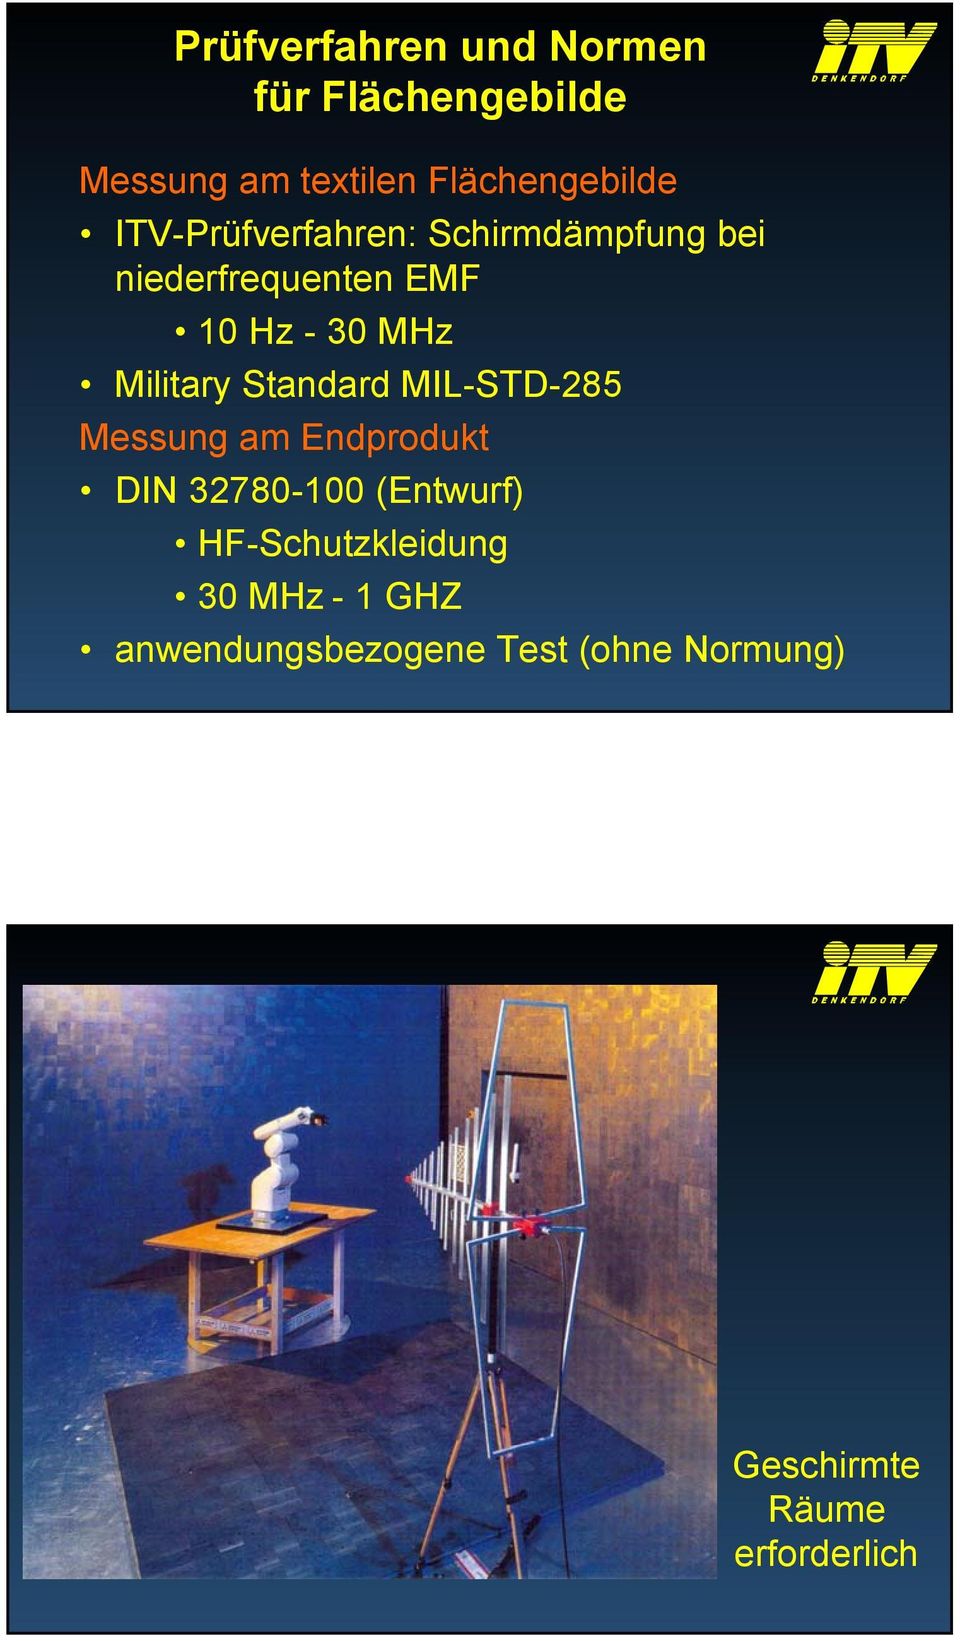 Standard MIL-STD-285 Messung am Endprodukt DIN 32780-100 (Entwurf)